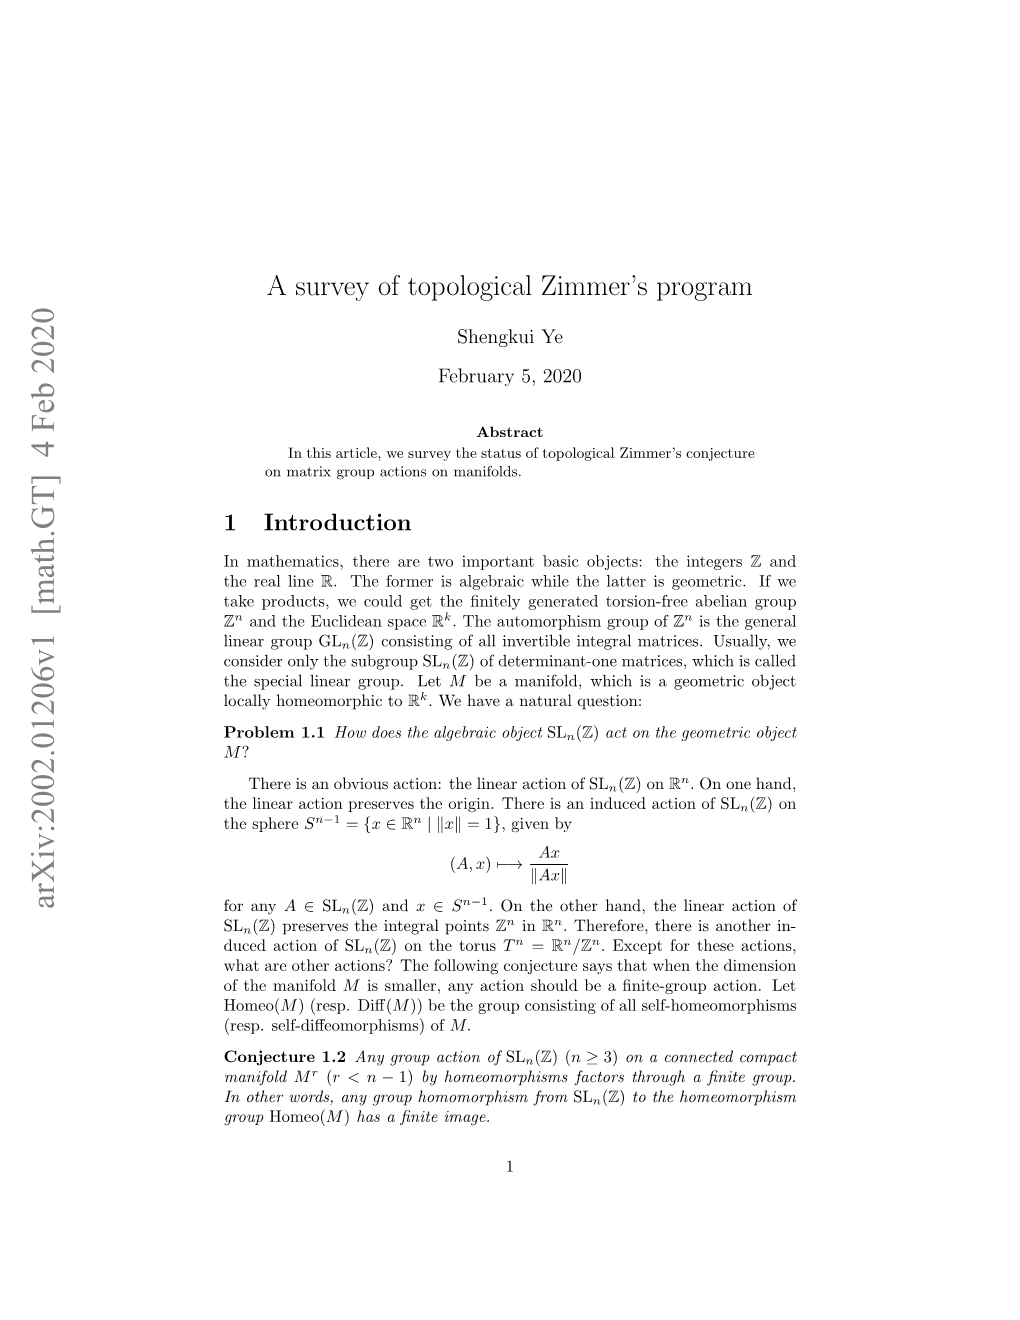 A Survey of Topological Zimmer's Program